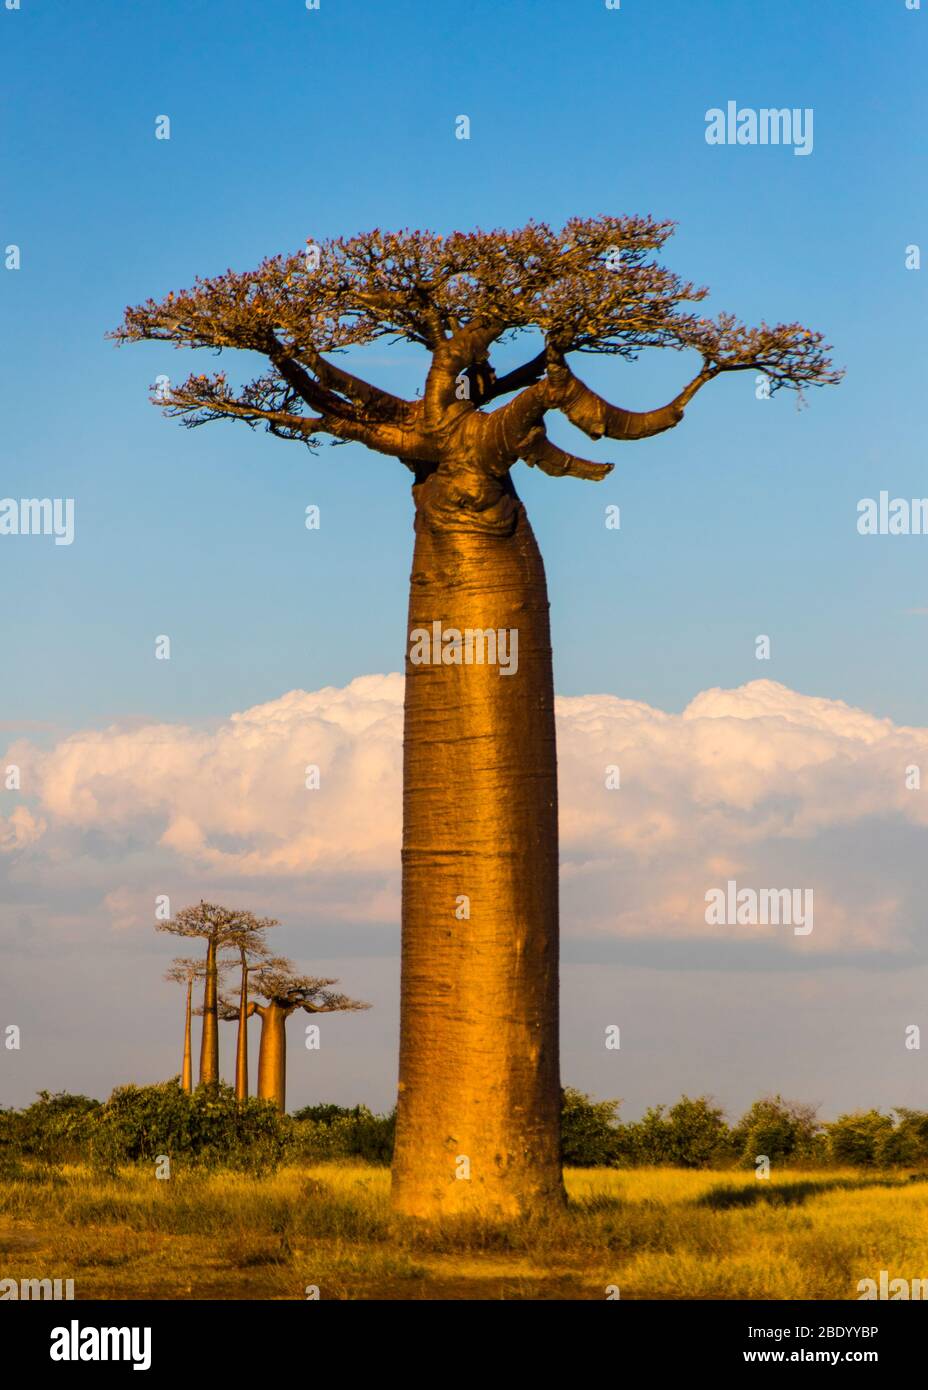 Arbre baobab contre ciel nuageux, Morondava, Madagascar Banque D'Images